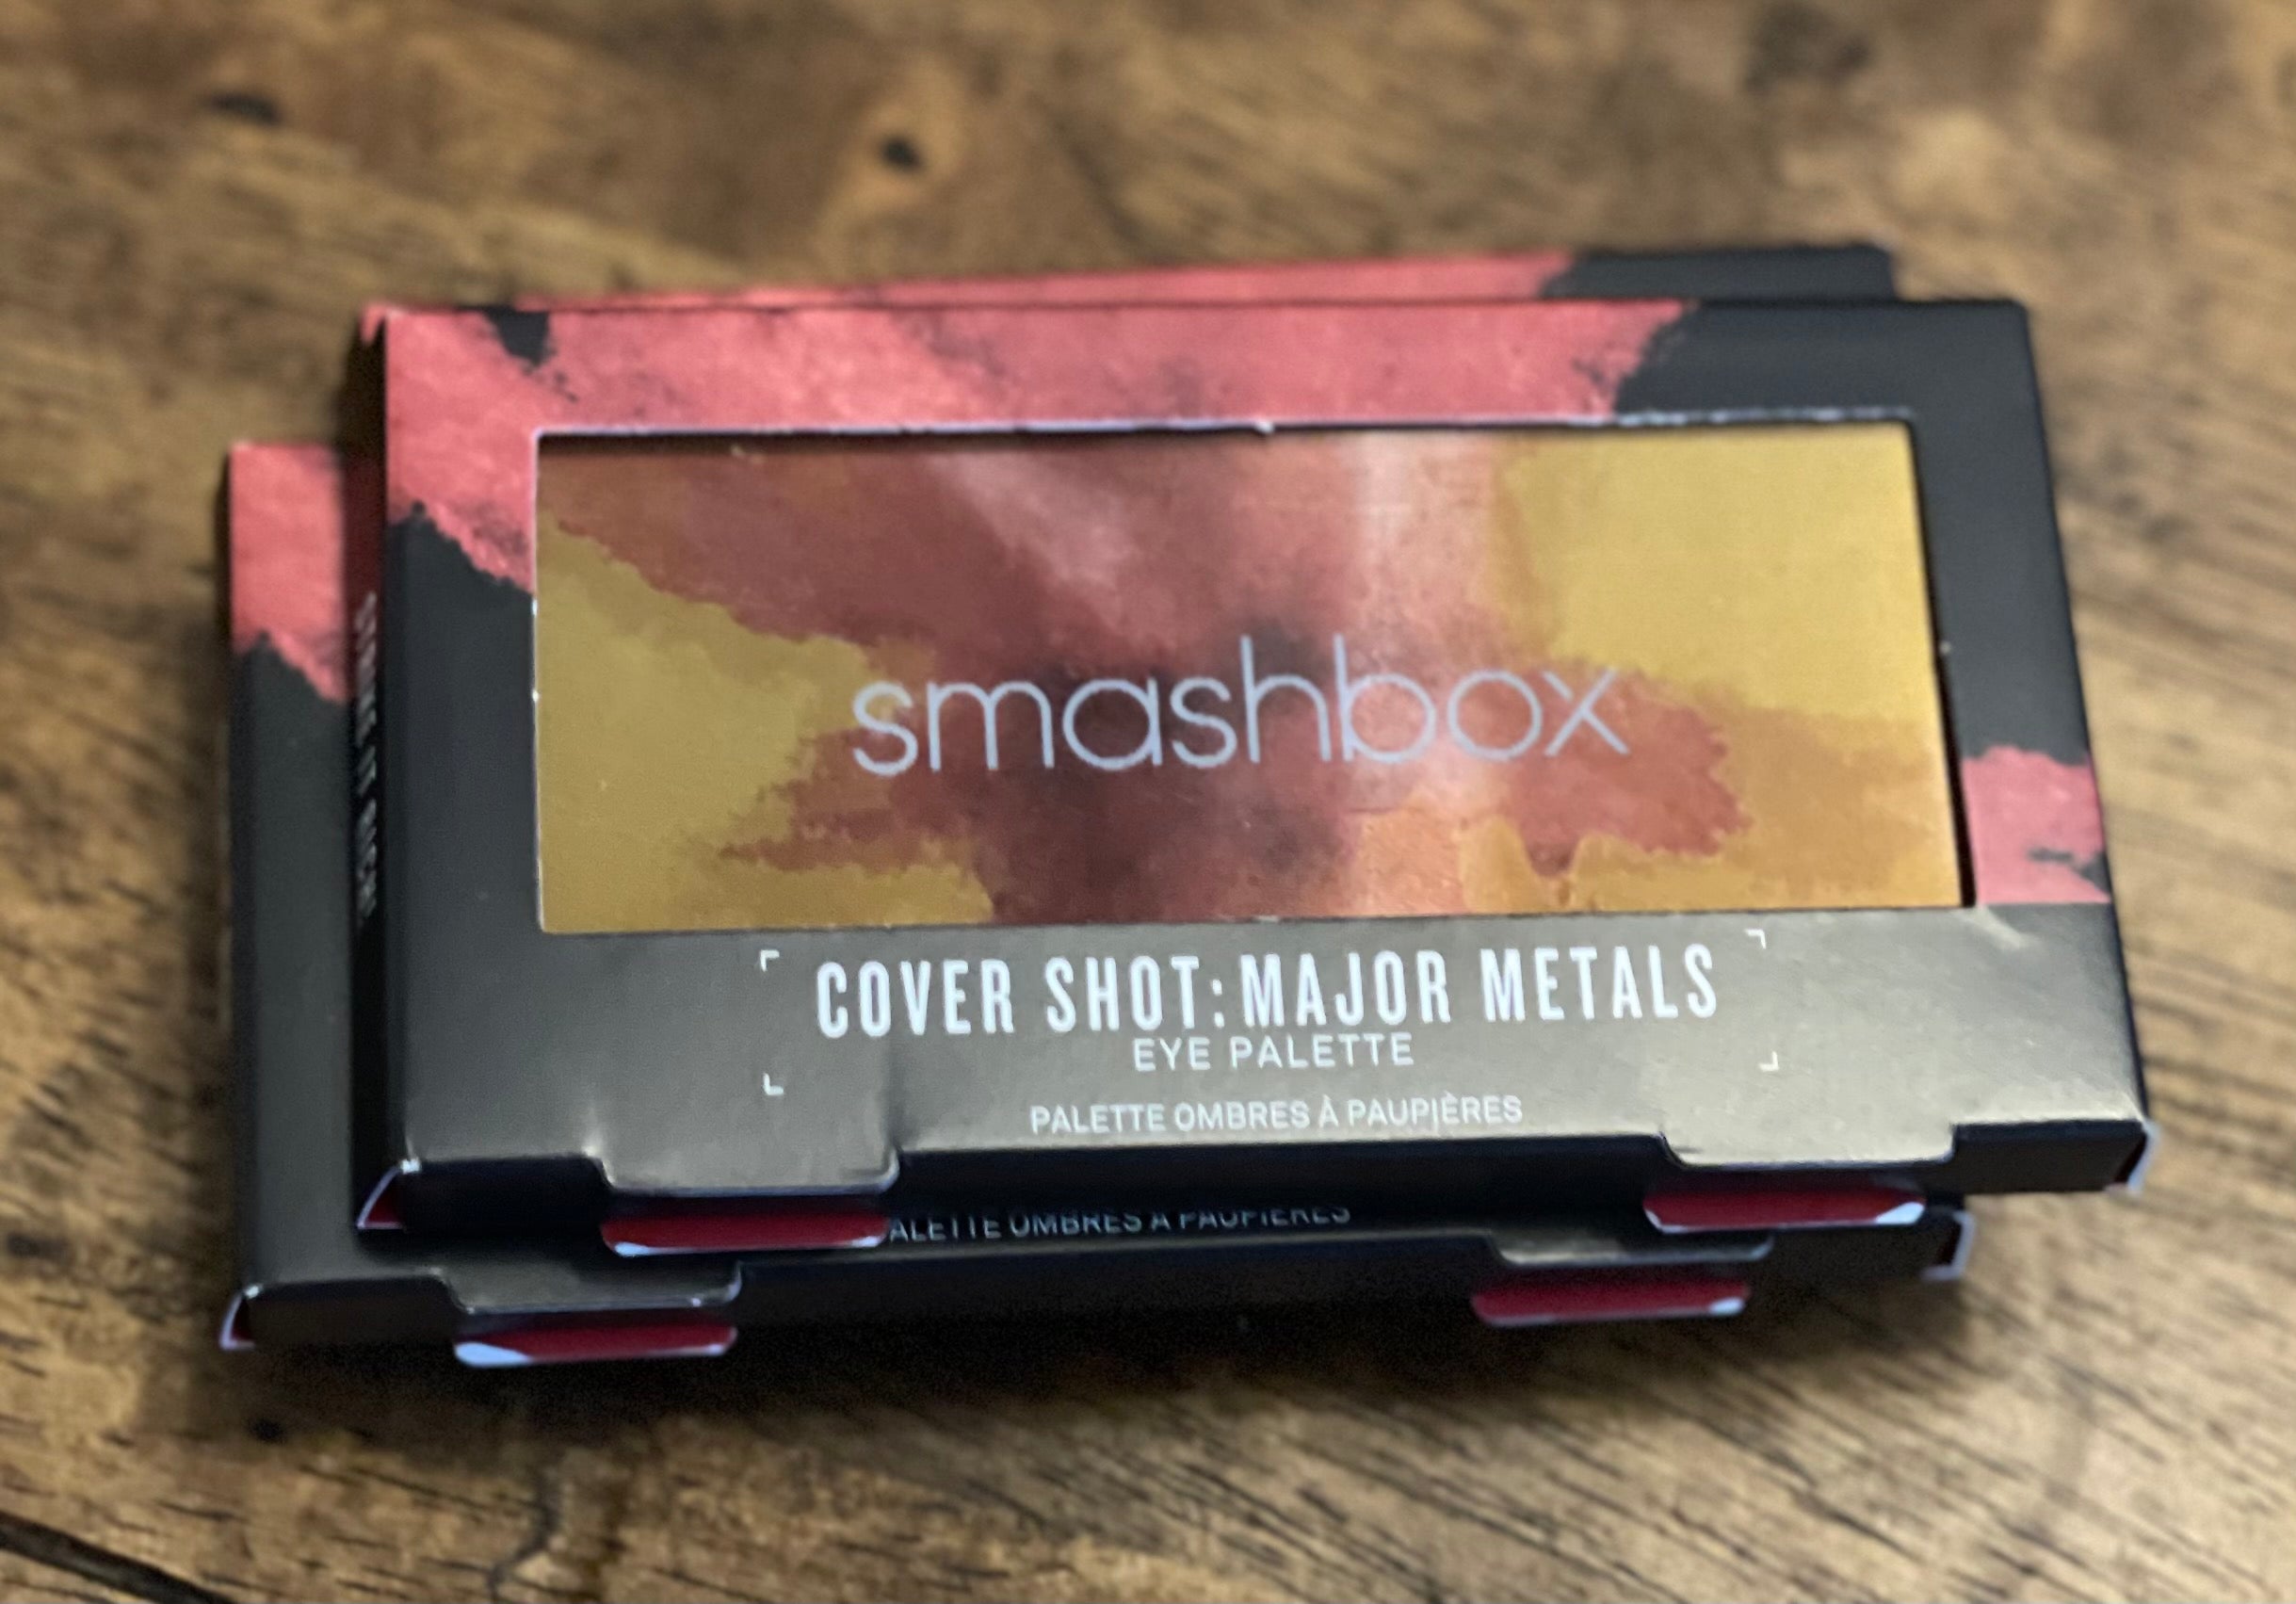 Smash box Cover Shot: Major Metals